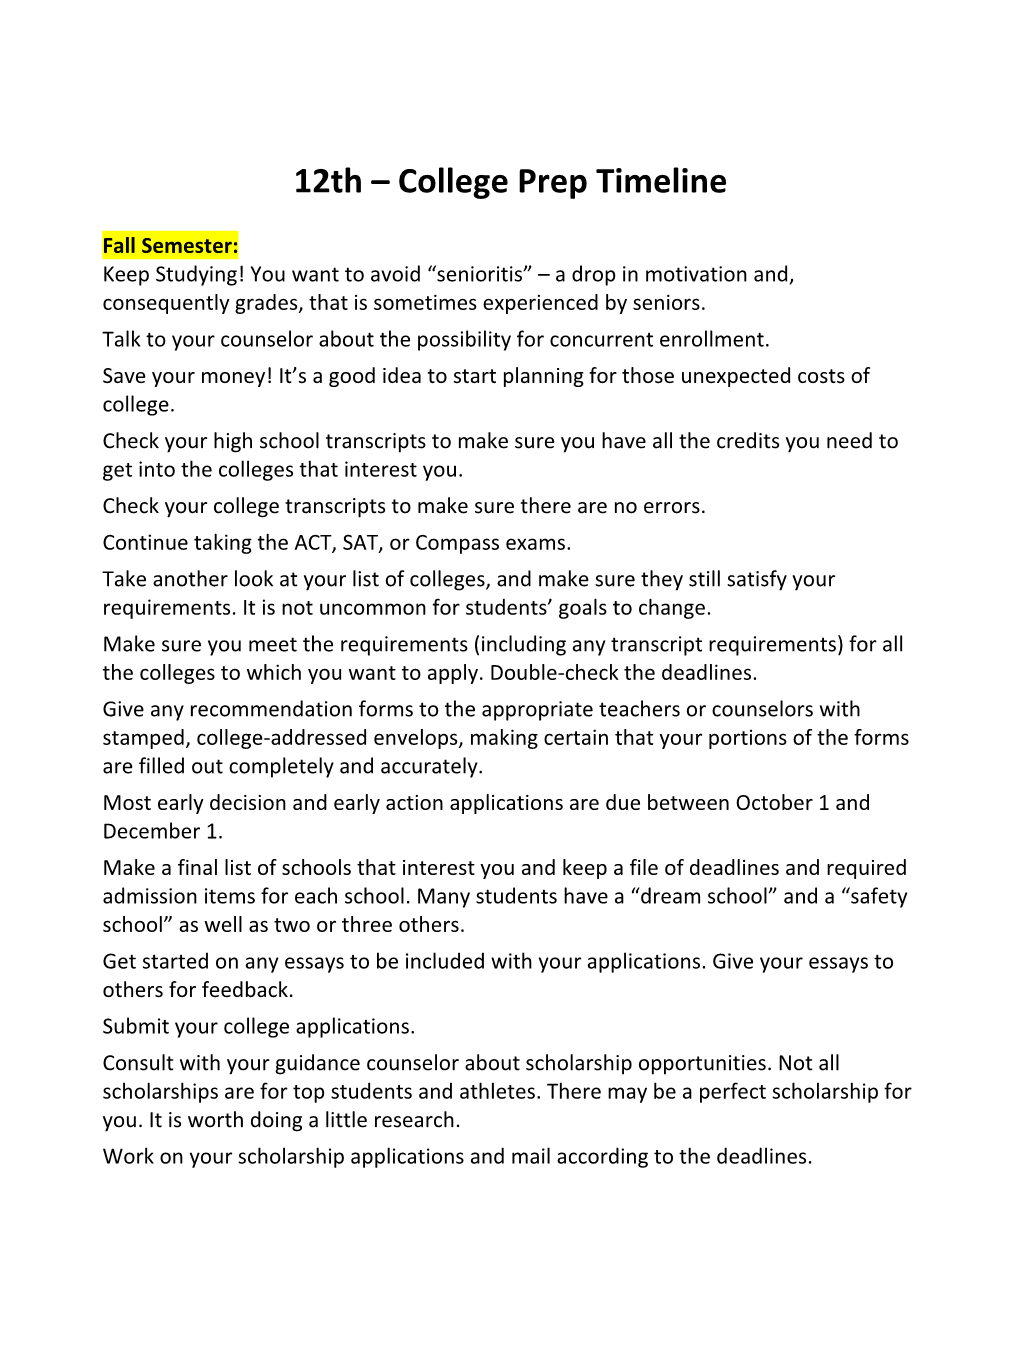 12Th College Prep Timeline